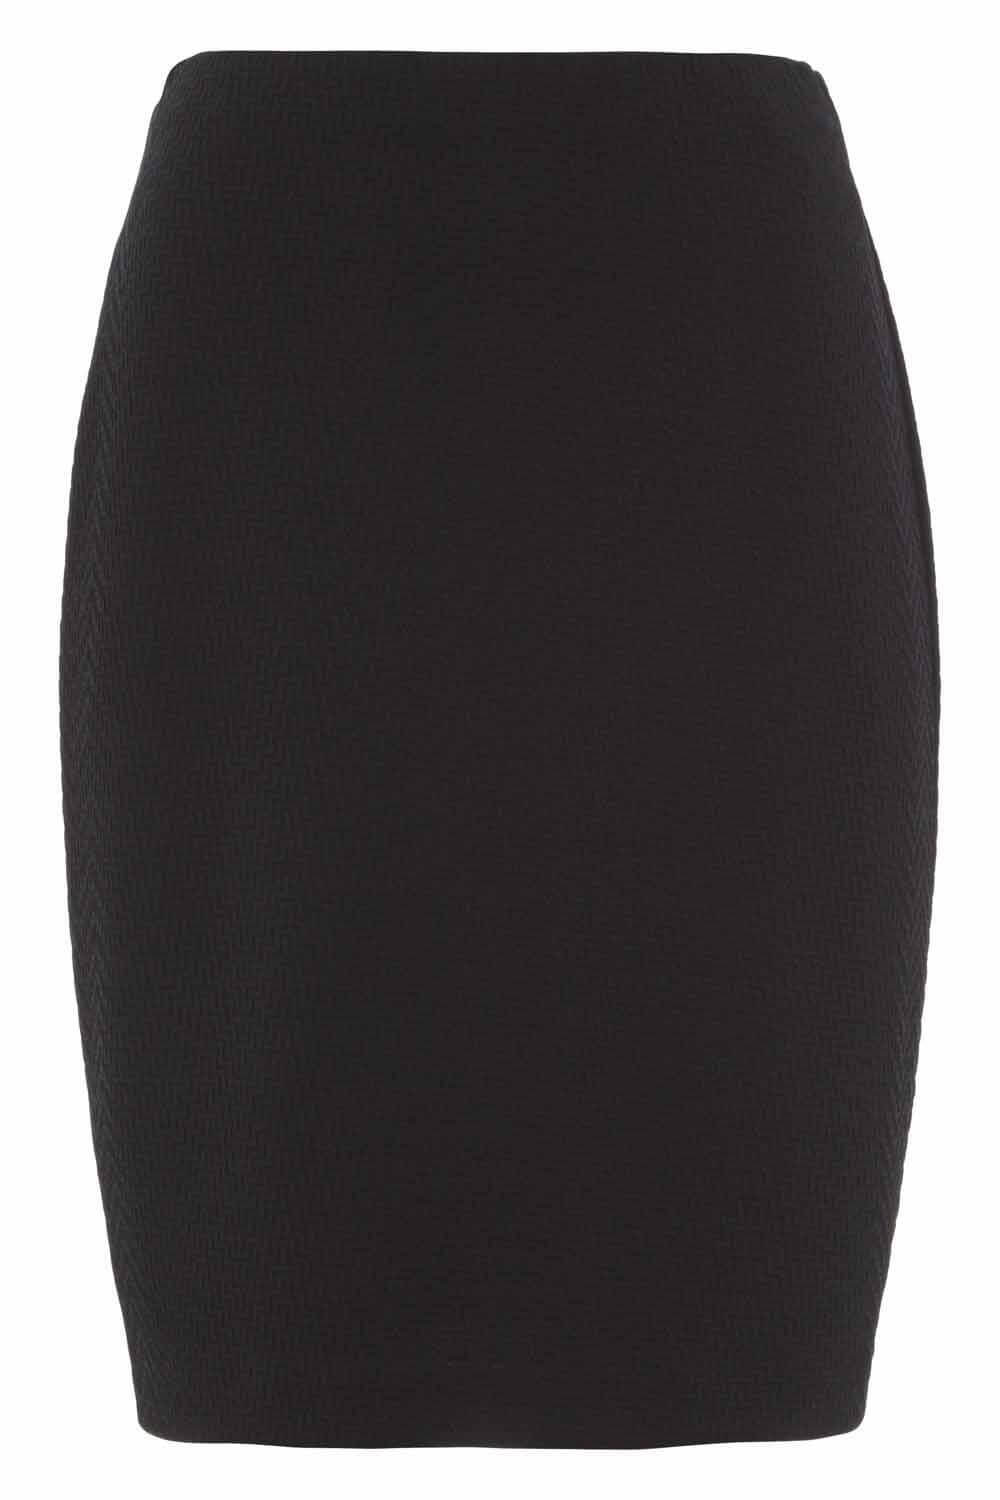 Black Short Textured Jersey Skirt, Image 4 of 4